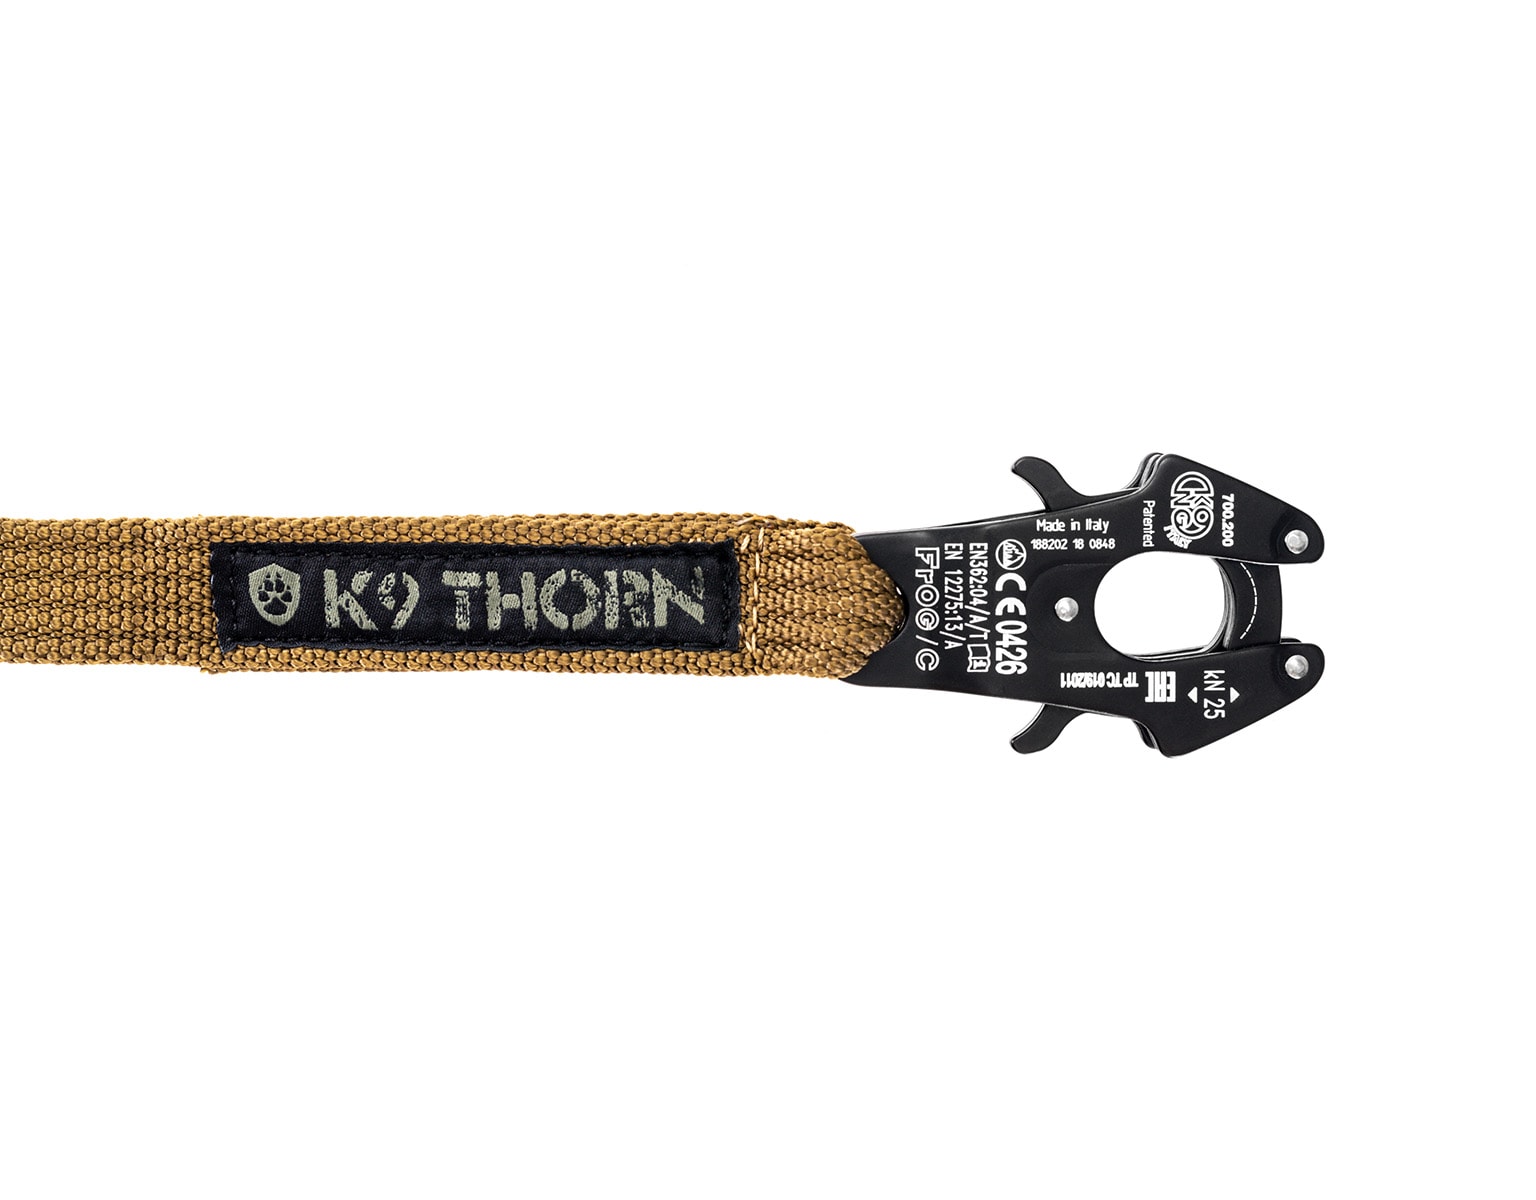 Smycz K9 Thorn Kong Frog Coyote - 100 cm